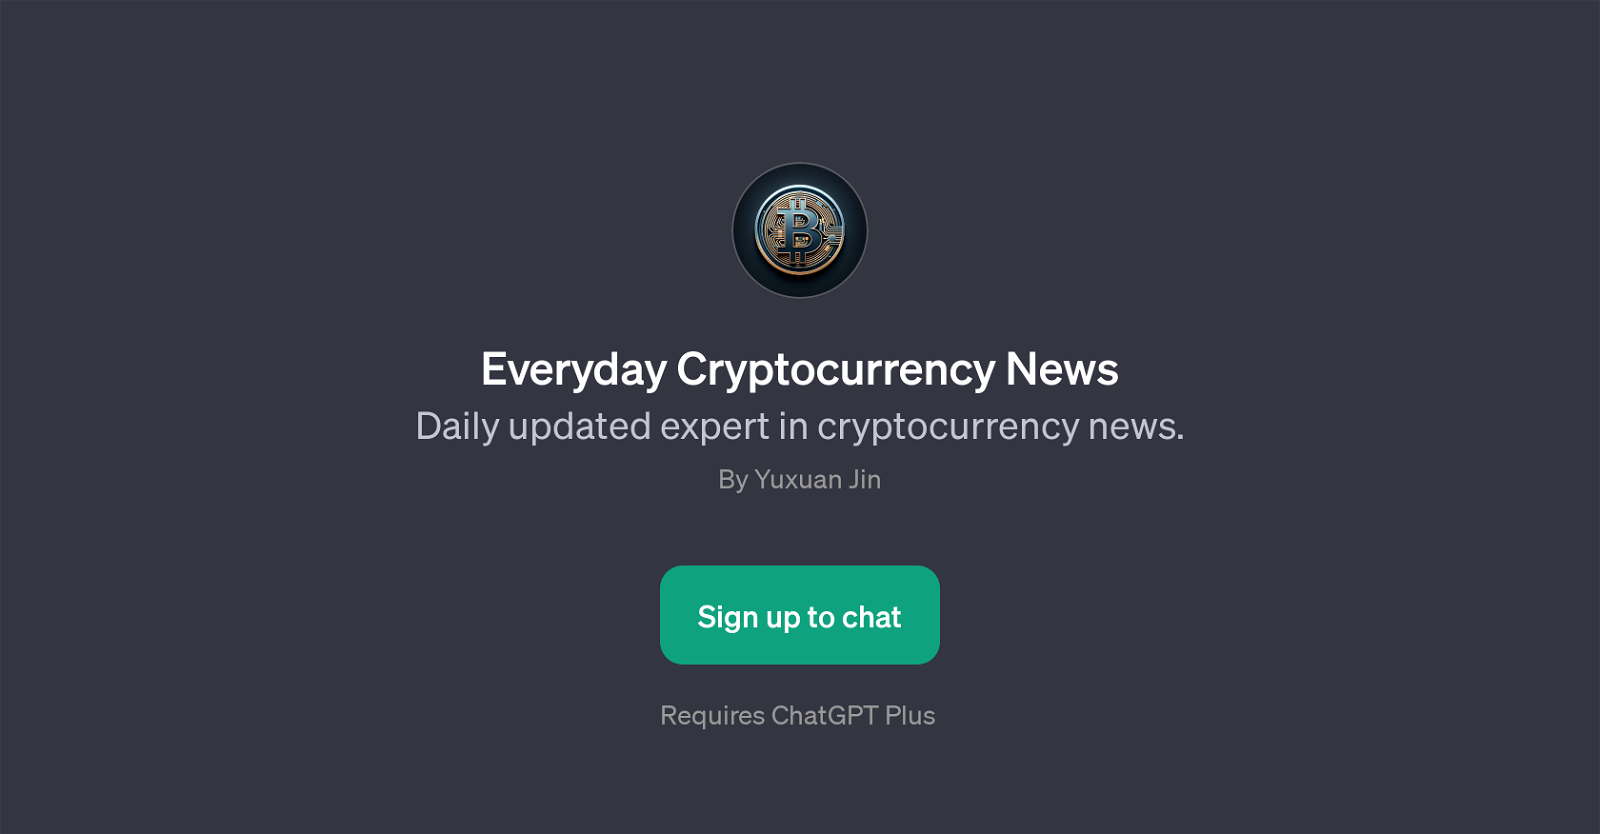 Everyday Cryptocurrency News website